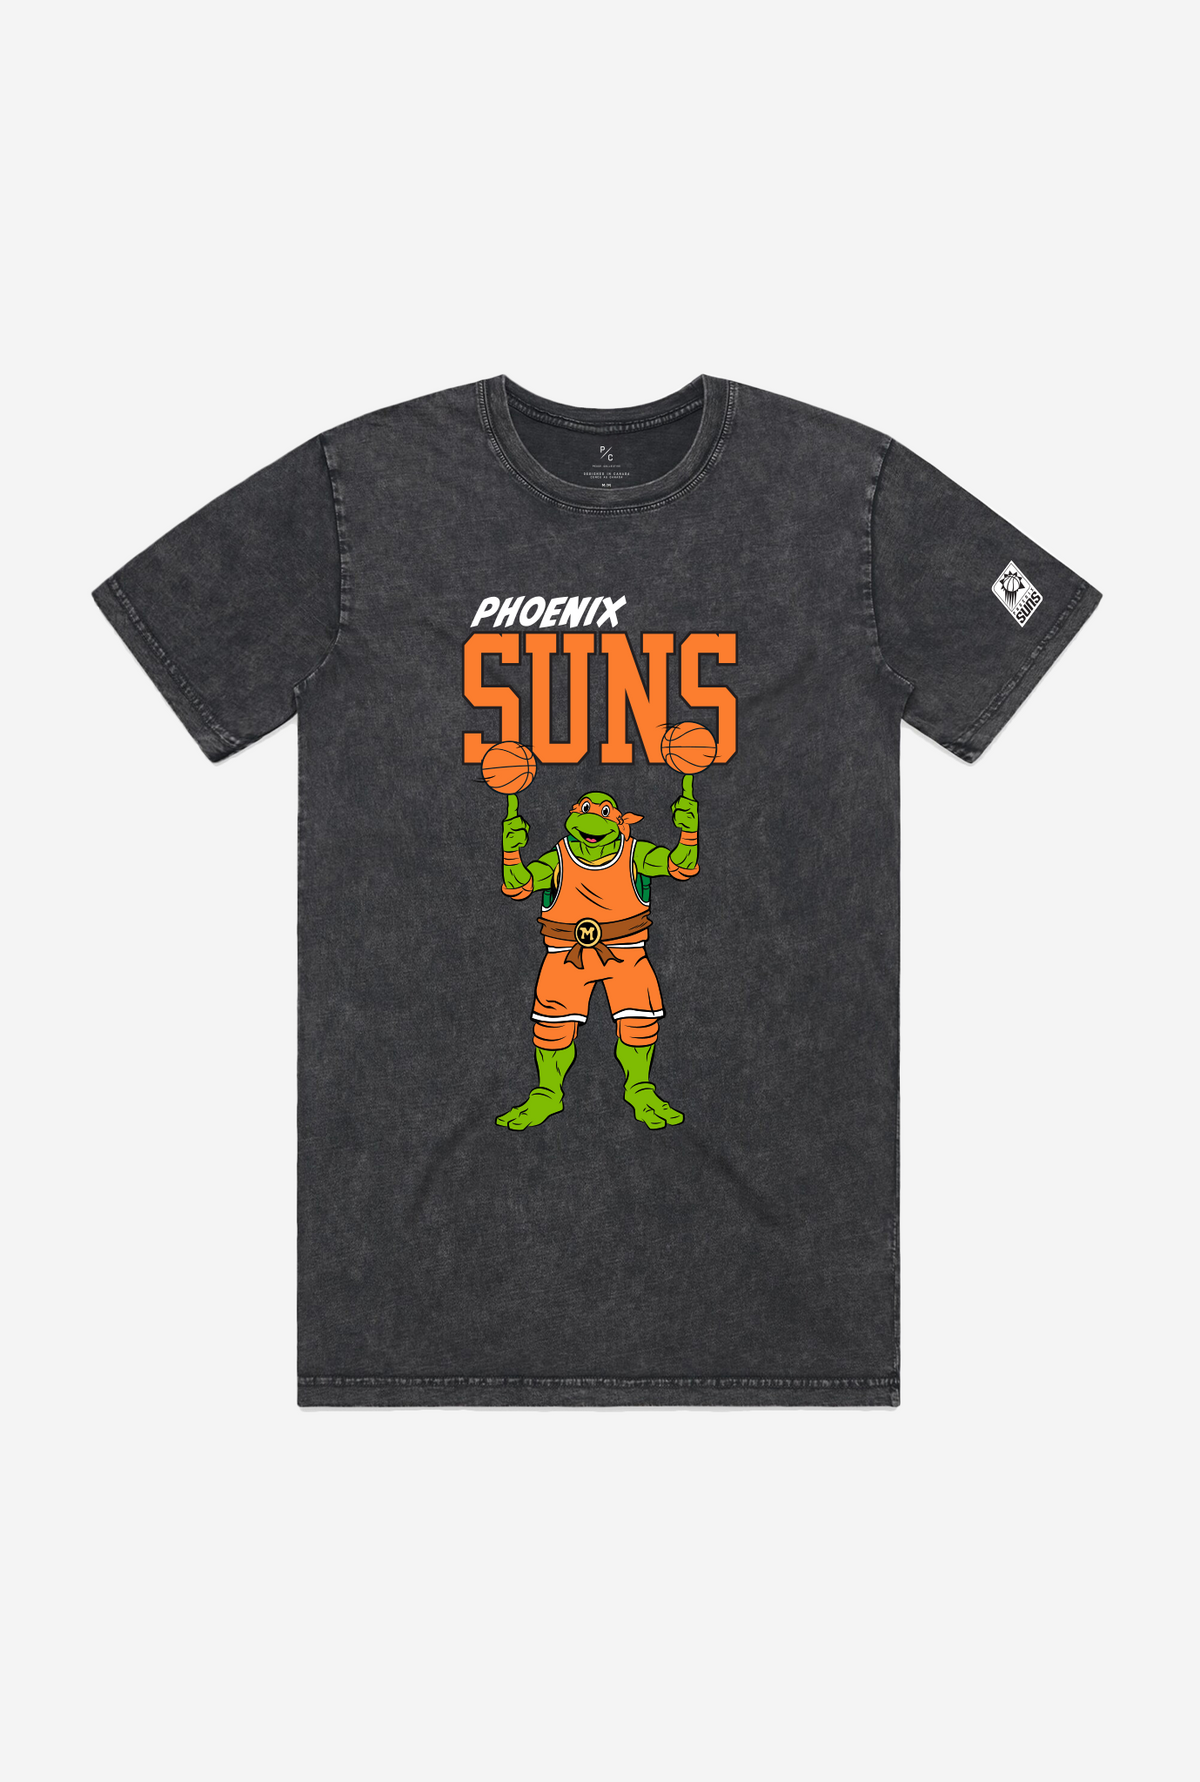 P/C x TMNT Phoenix Suns Stonewash T-Shirt - Black